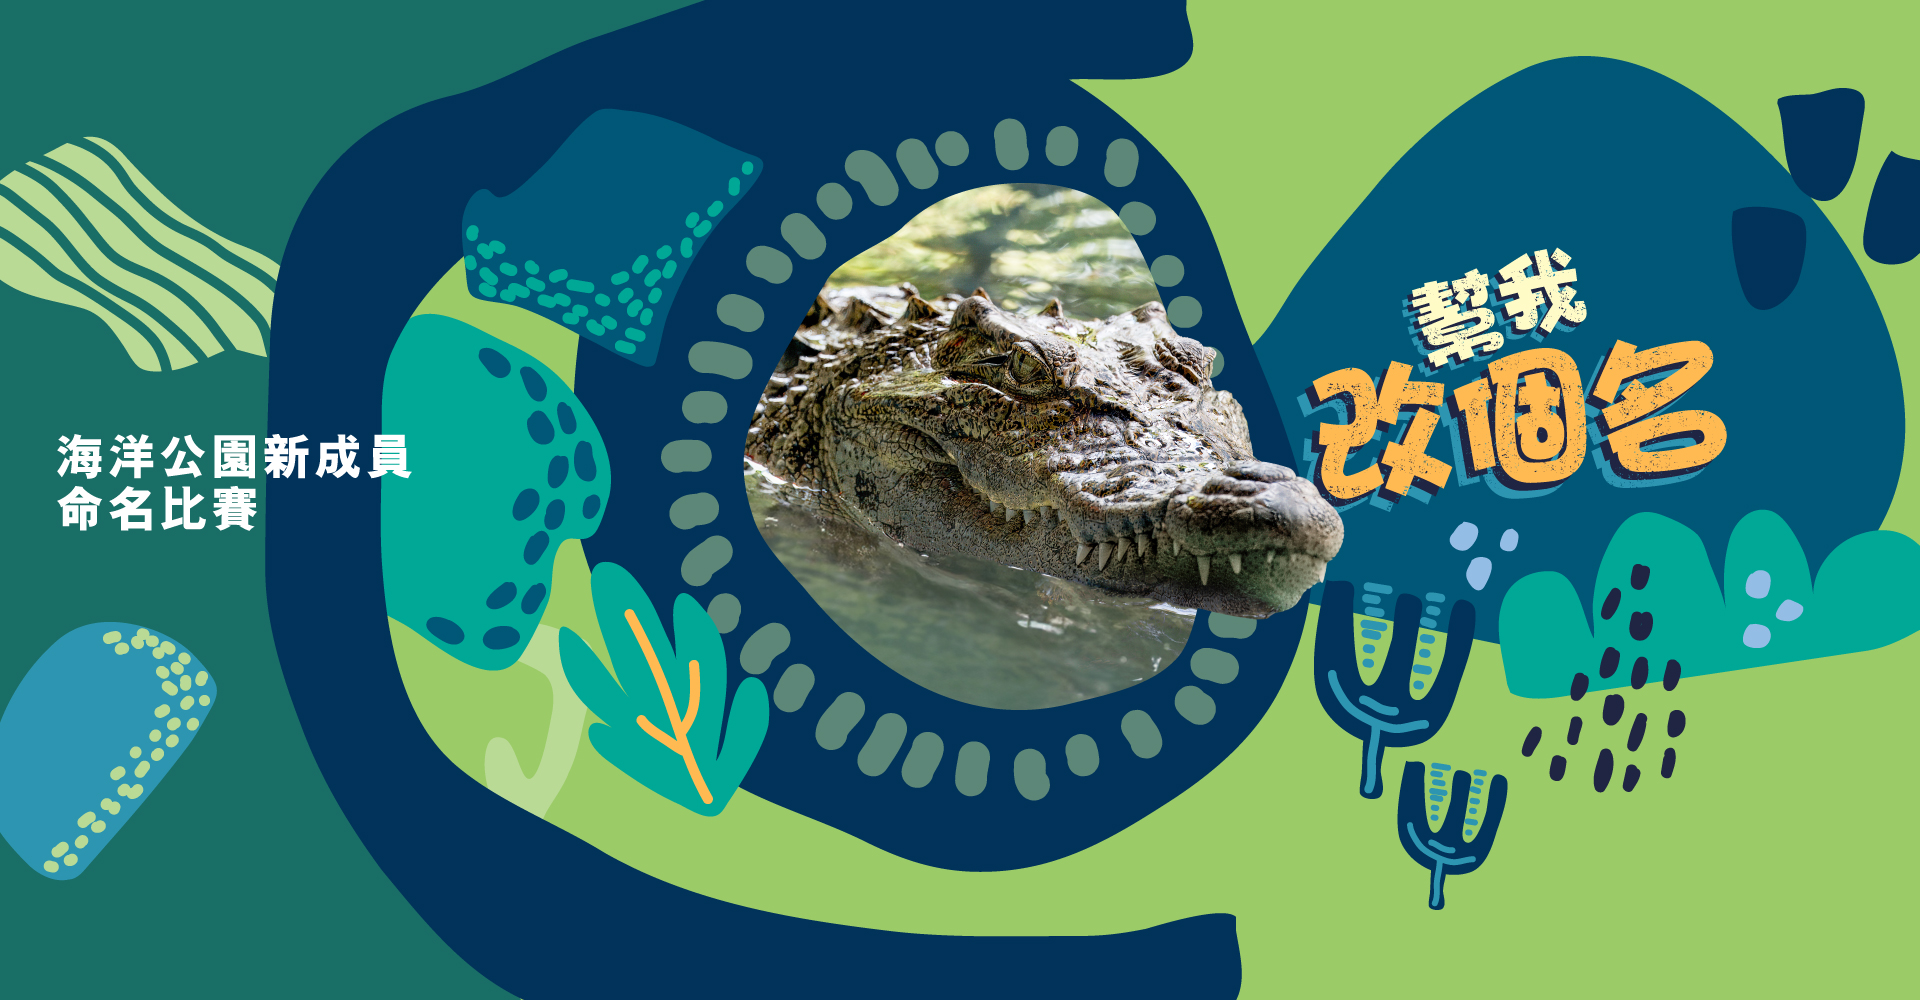 https://media.oceanpark.com.hk/files/s3fs-public/op-crocodile-naming-challenge-desktop-banner-tc.jpg